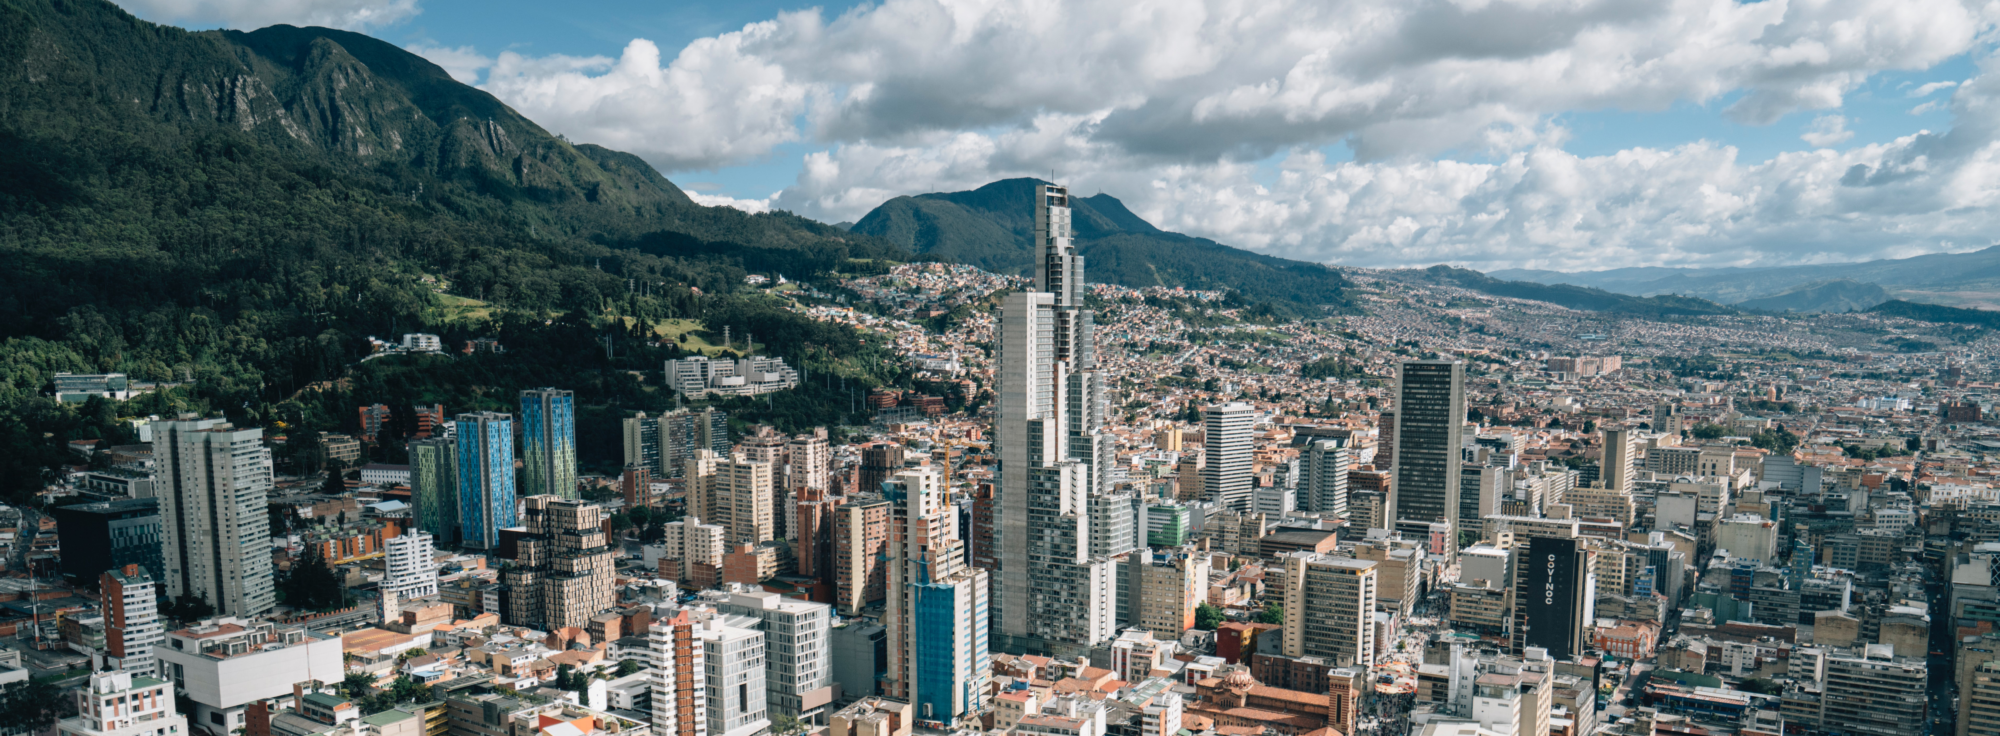 Bogotá, Colombia | Wellbeing Cities Winner 2021